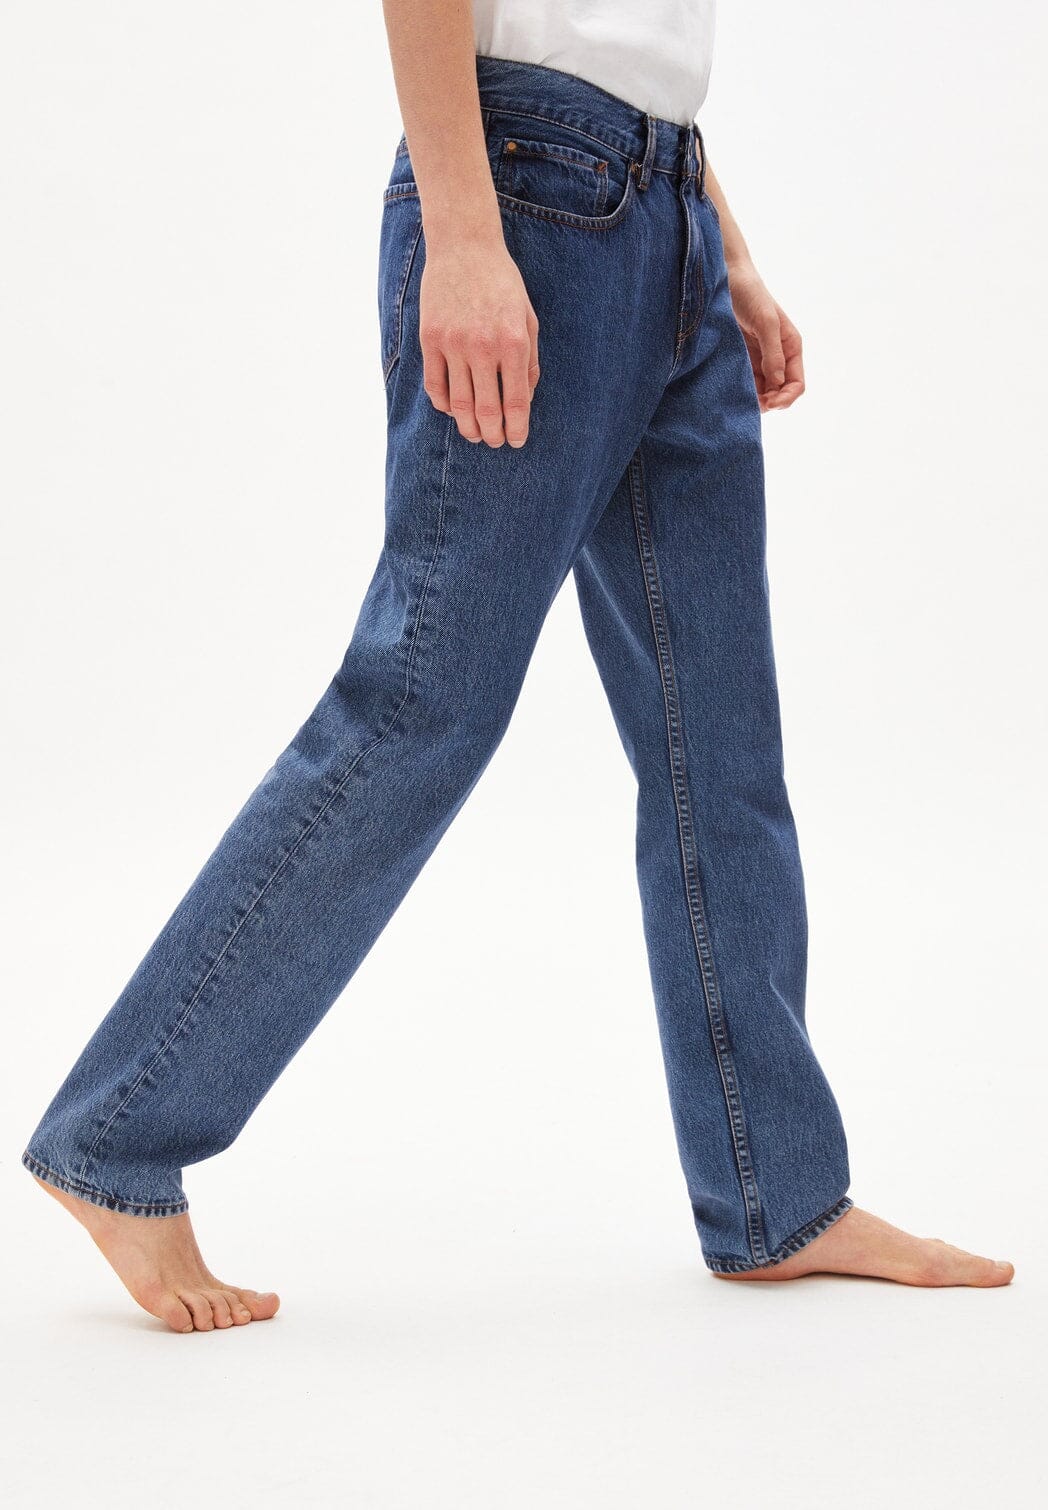 M's Dylaano retro jeans - Corte recto - de orgánico - Weekendbee - sustainable sportswear